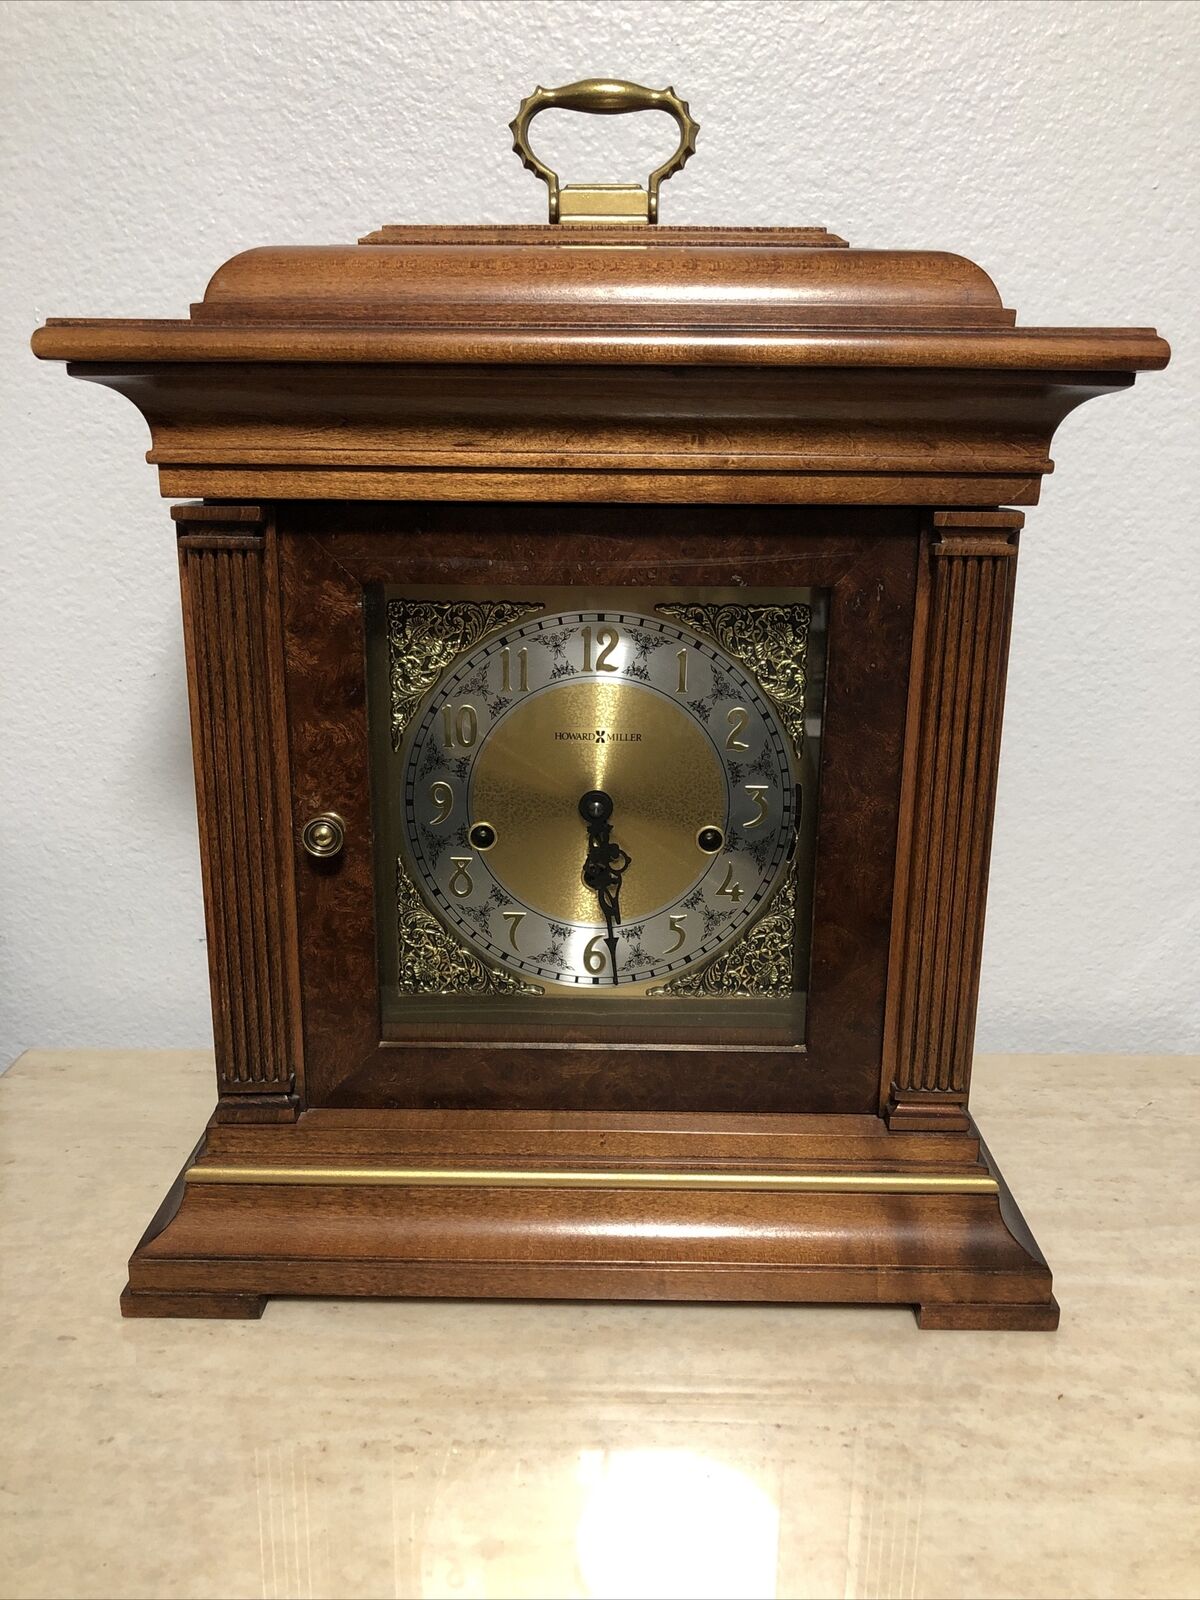 Howard Miller Thomas Tompion mantel clock Model 612-436 Serial F0003160112 & Key